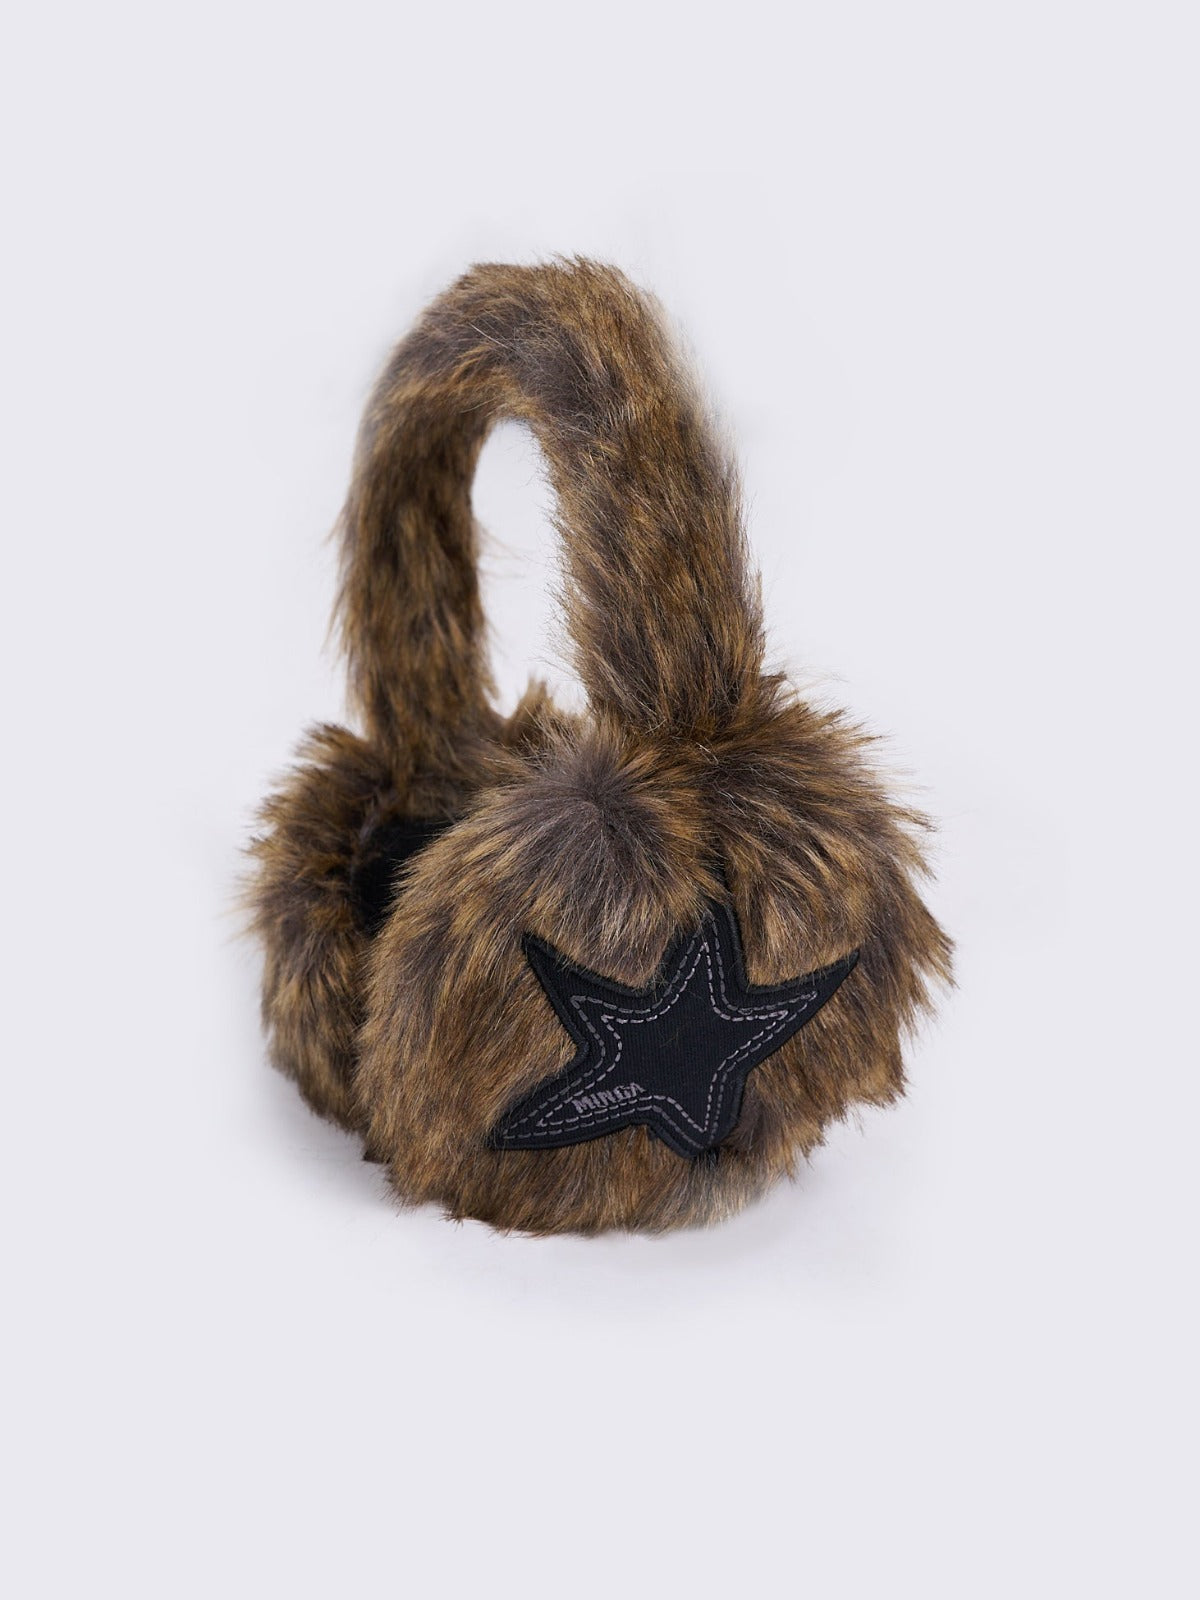 Faux Fur Star Earmuffs in Brown- Vintage-Inspired Grunge Ear